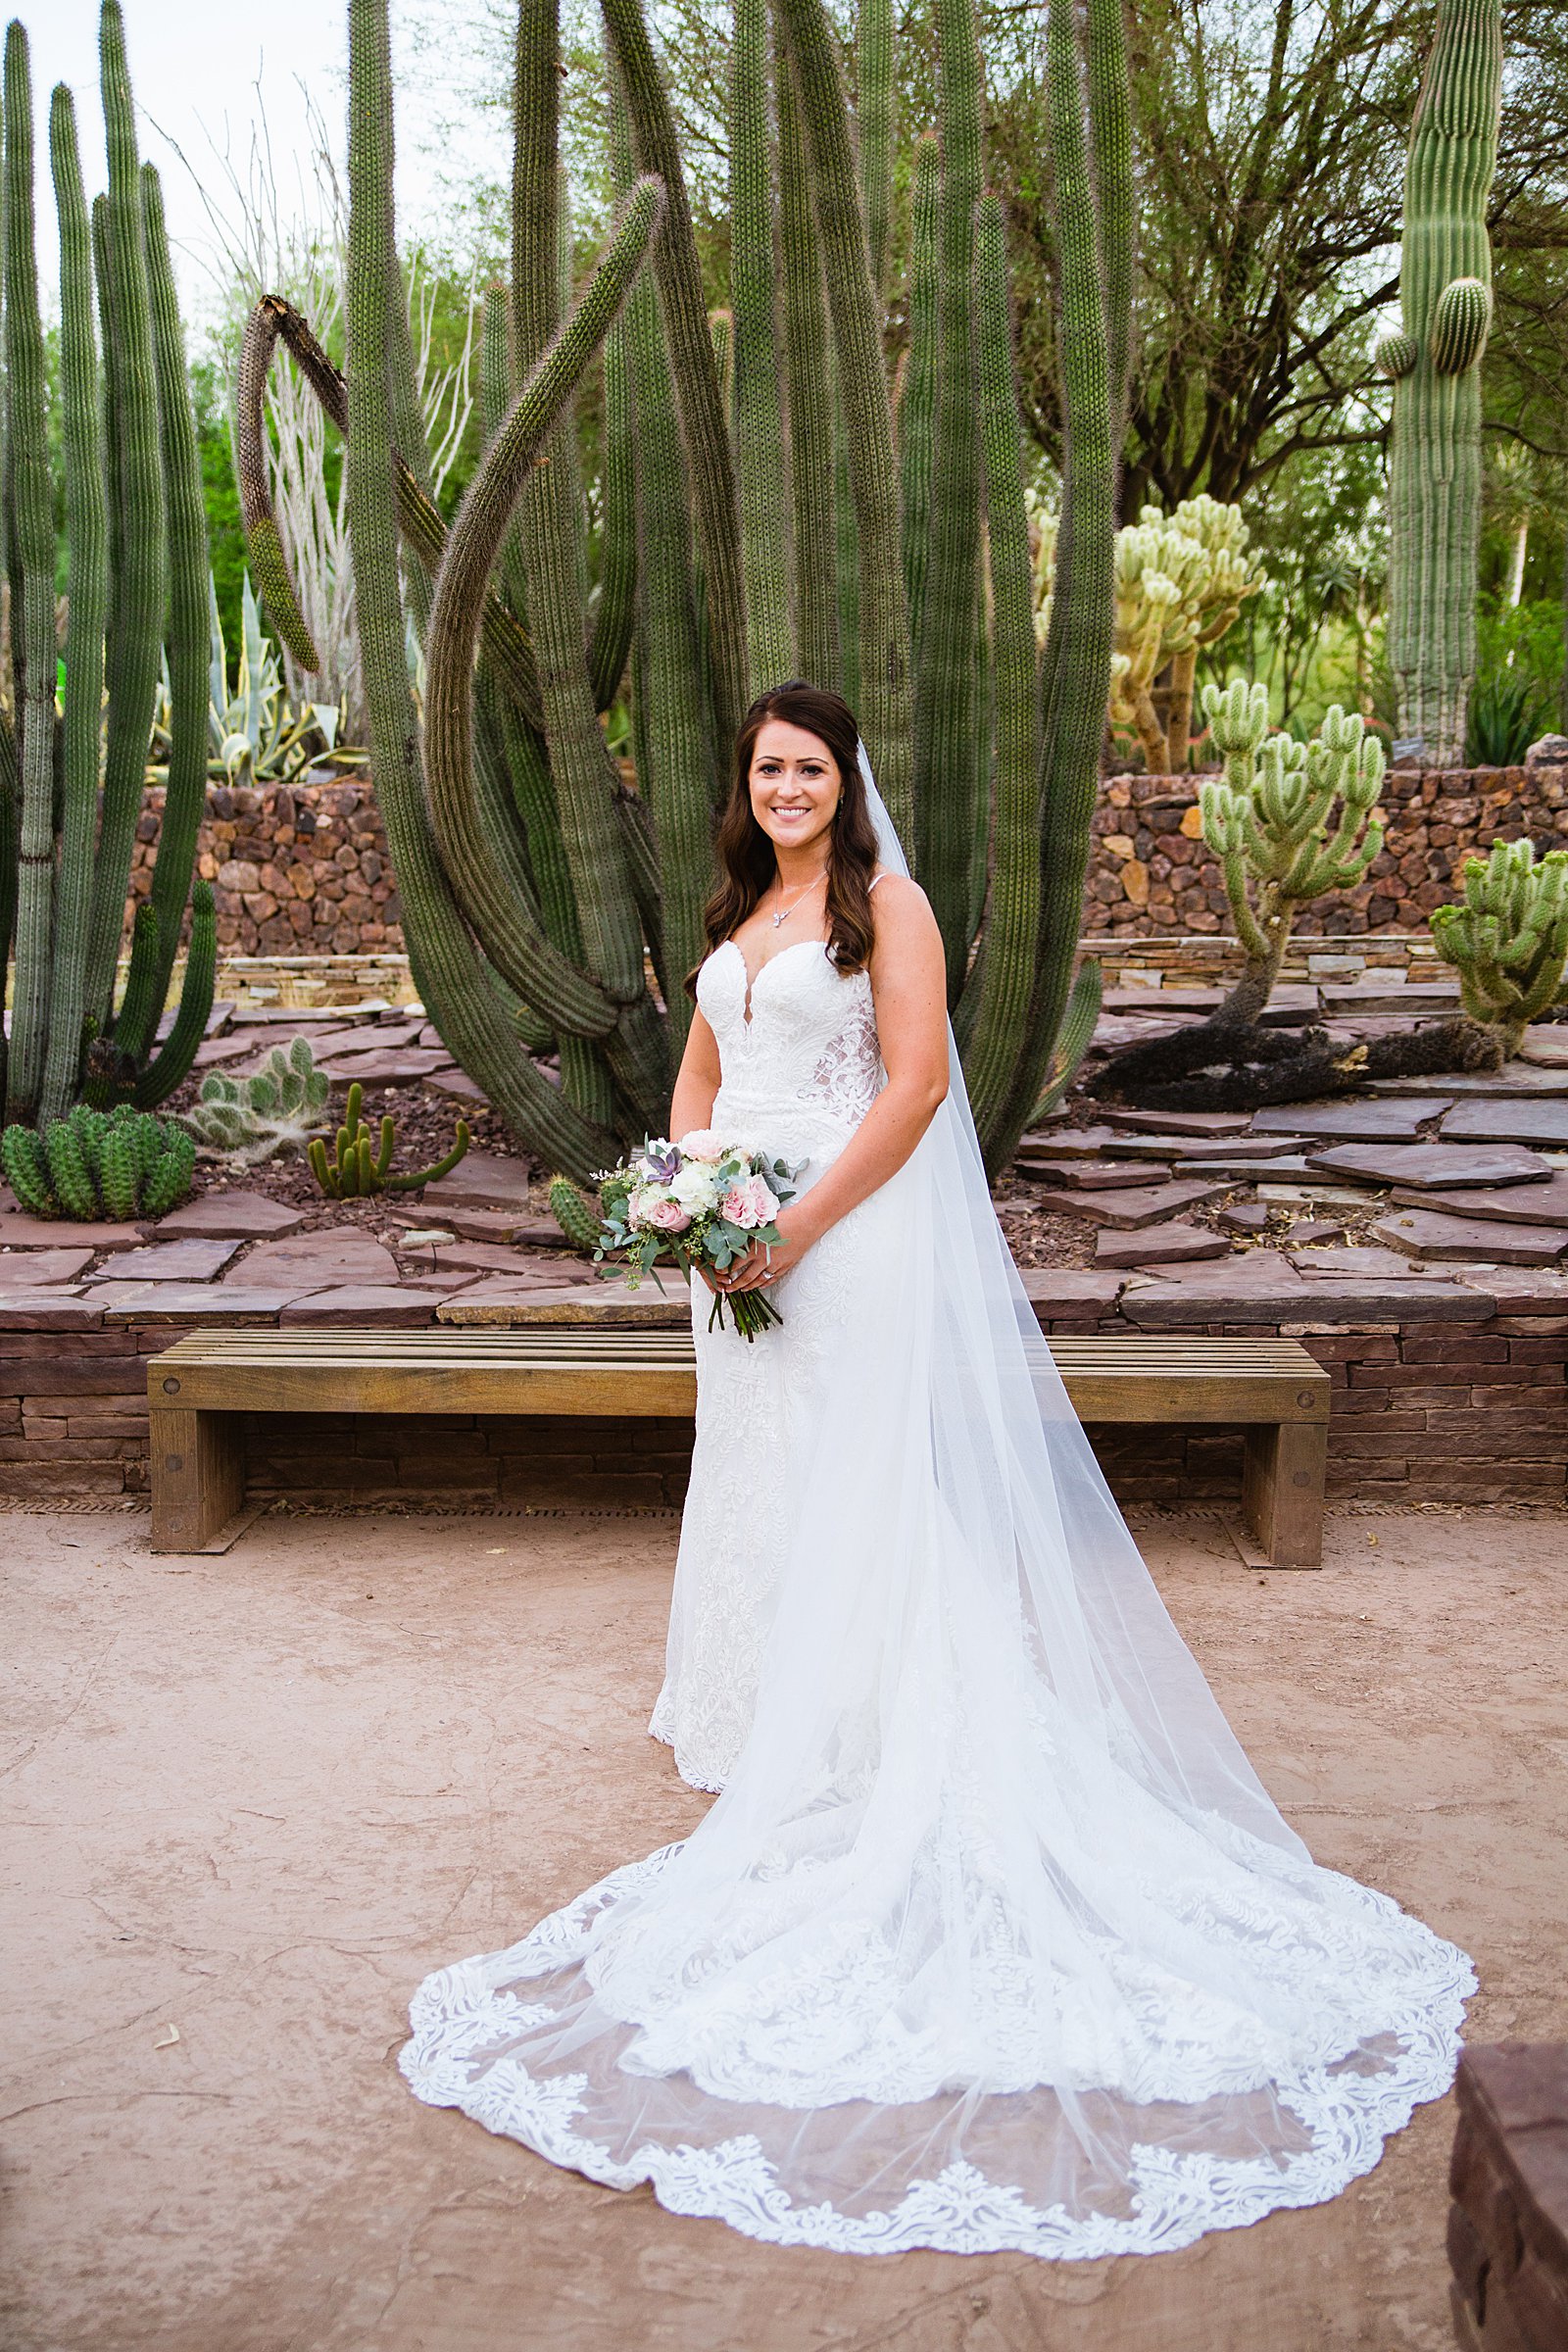 Bride's romantic lace wedding dress by PMA Photography.